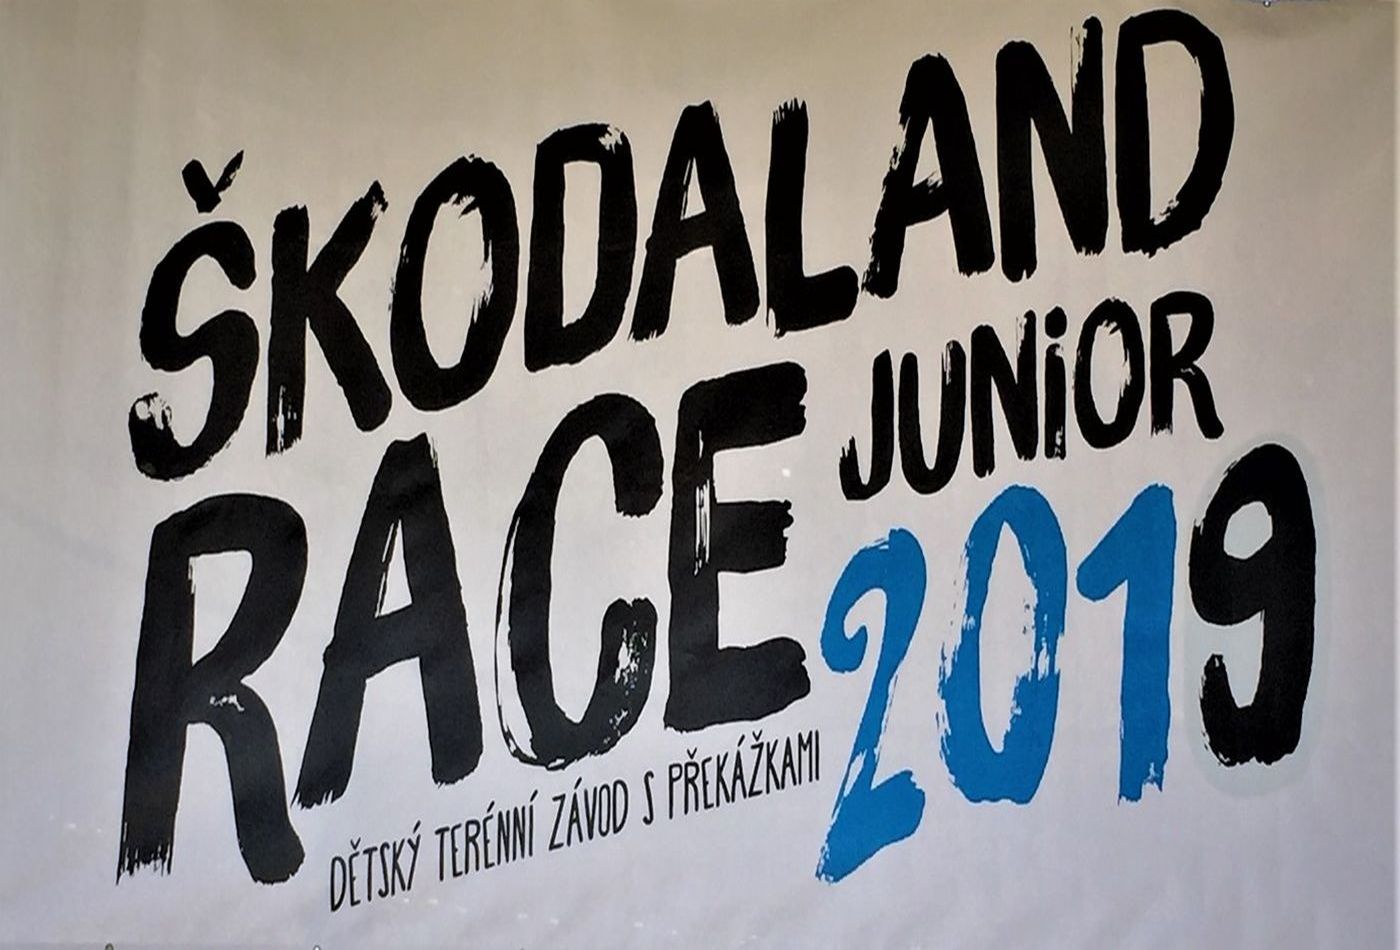 Škodaland-Race-Junior-623-1 (1)